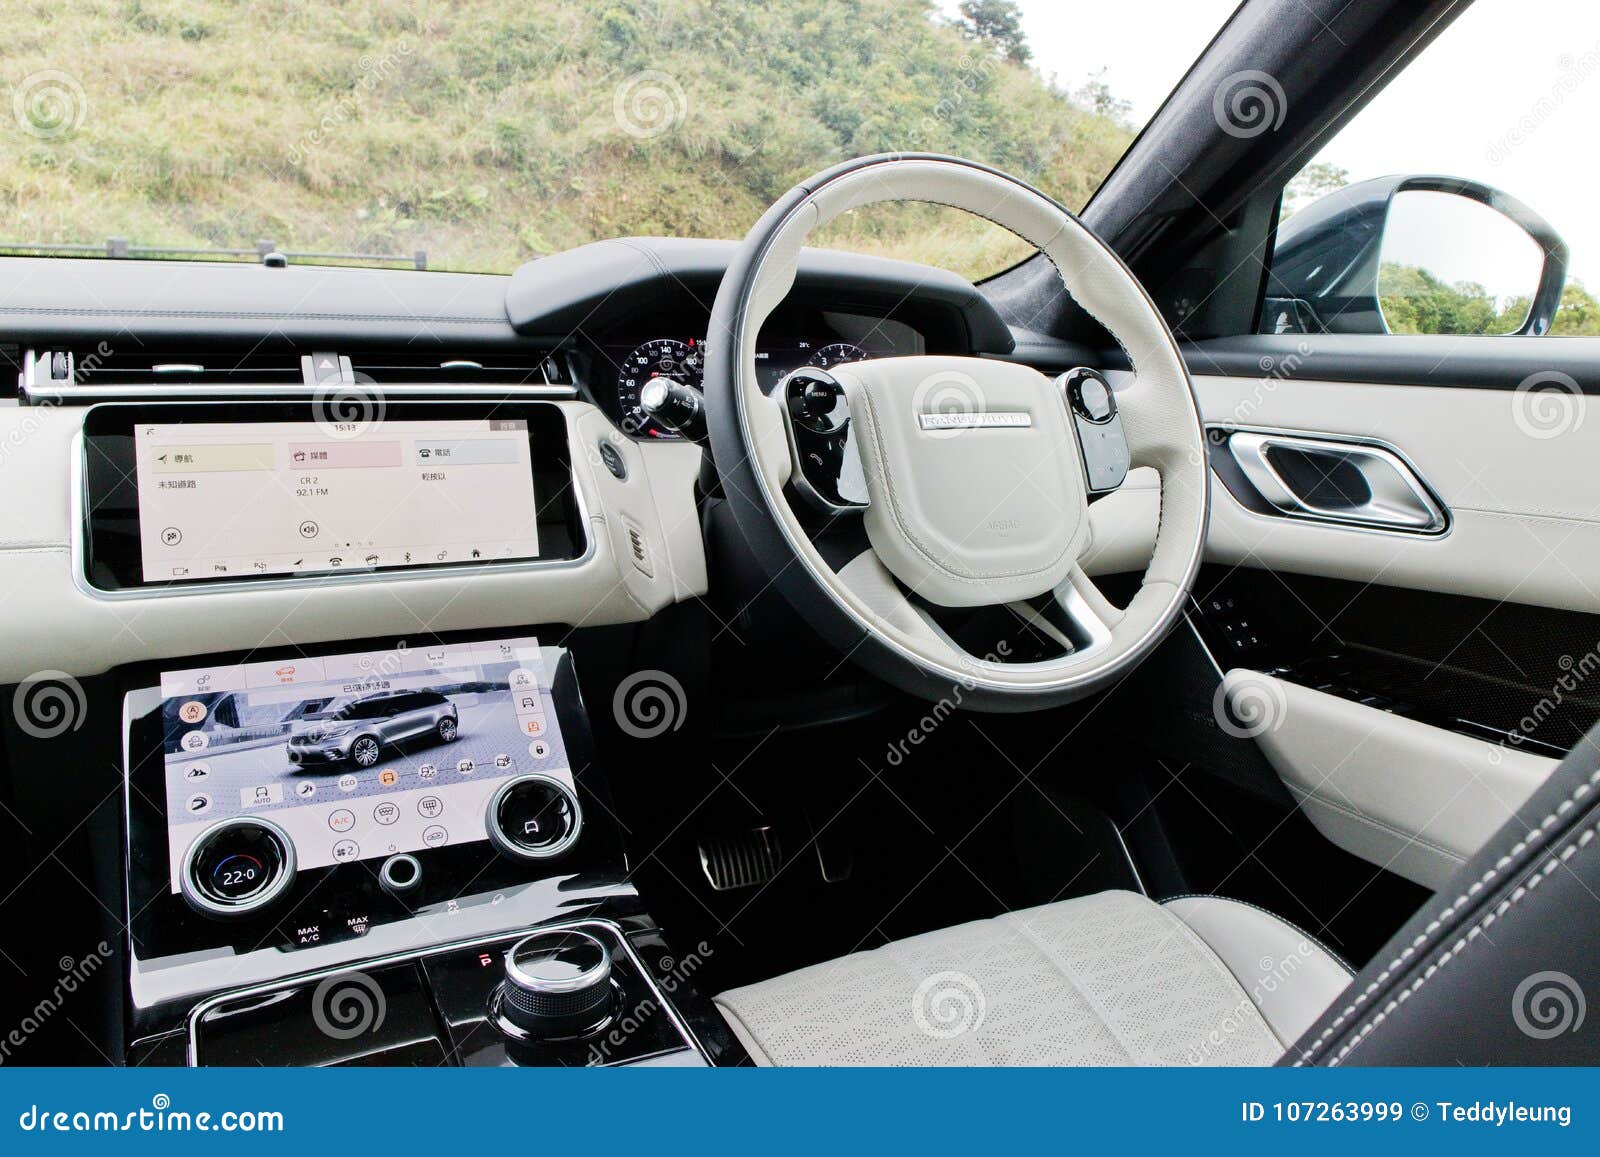 Range Rover Velar 2017 Interior Editorial Stock Image